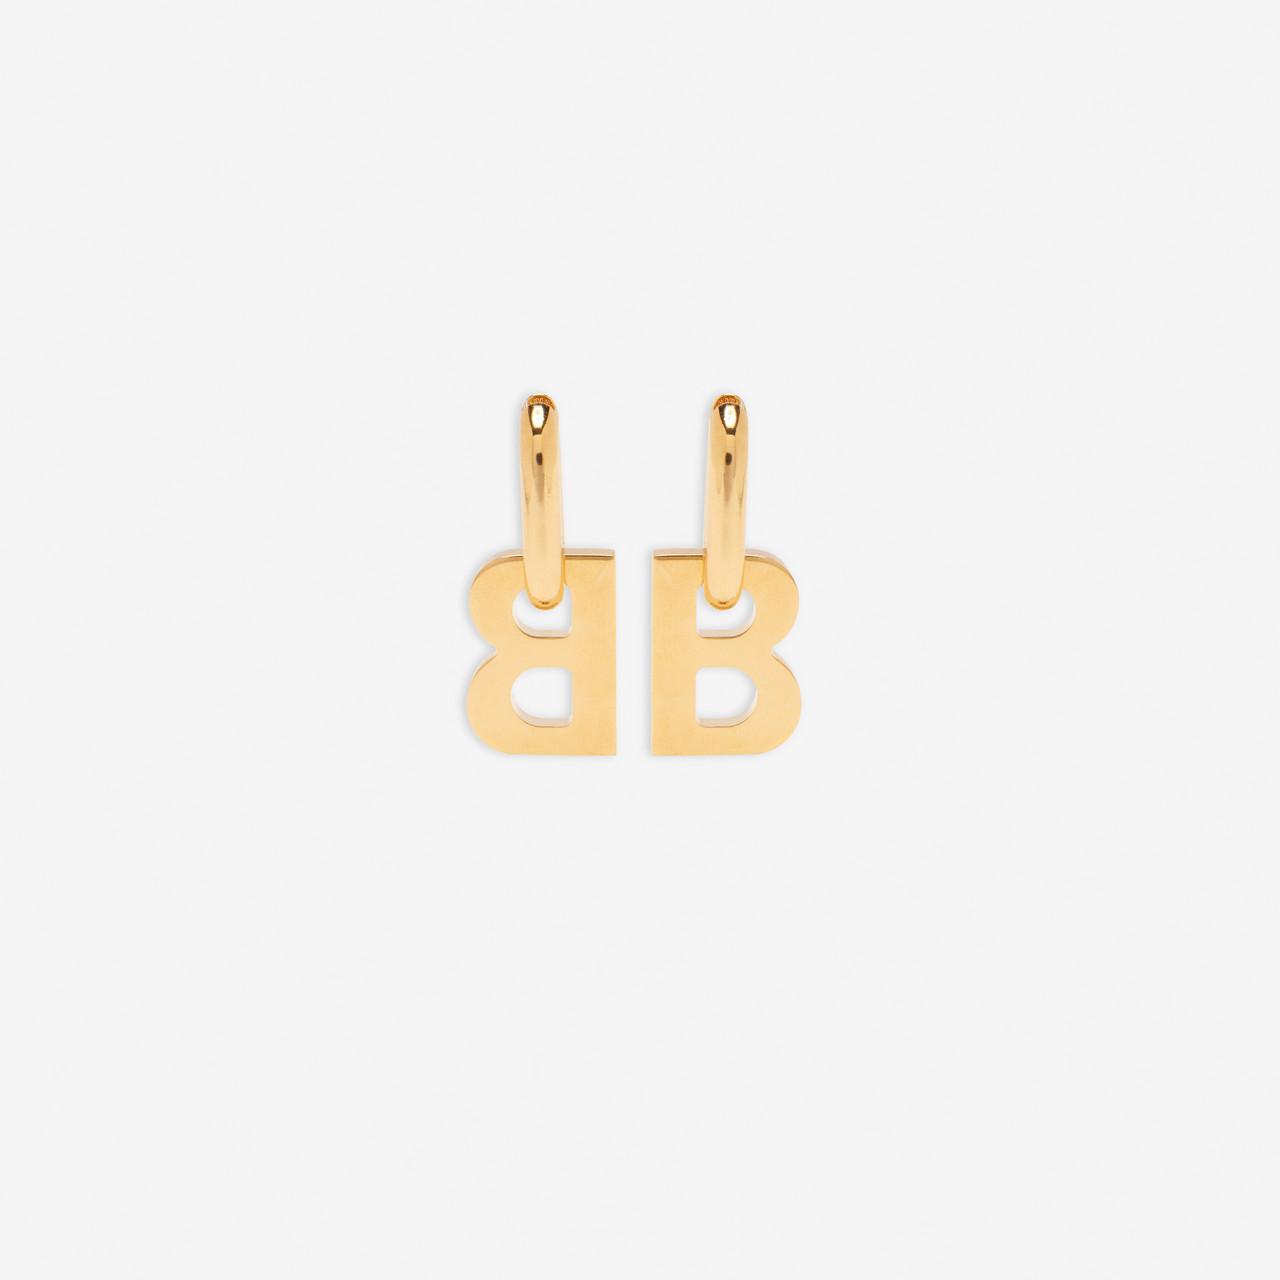 Balenciaga B Chain Xl Earrings in Gold (Metallic) - Lyst